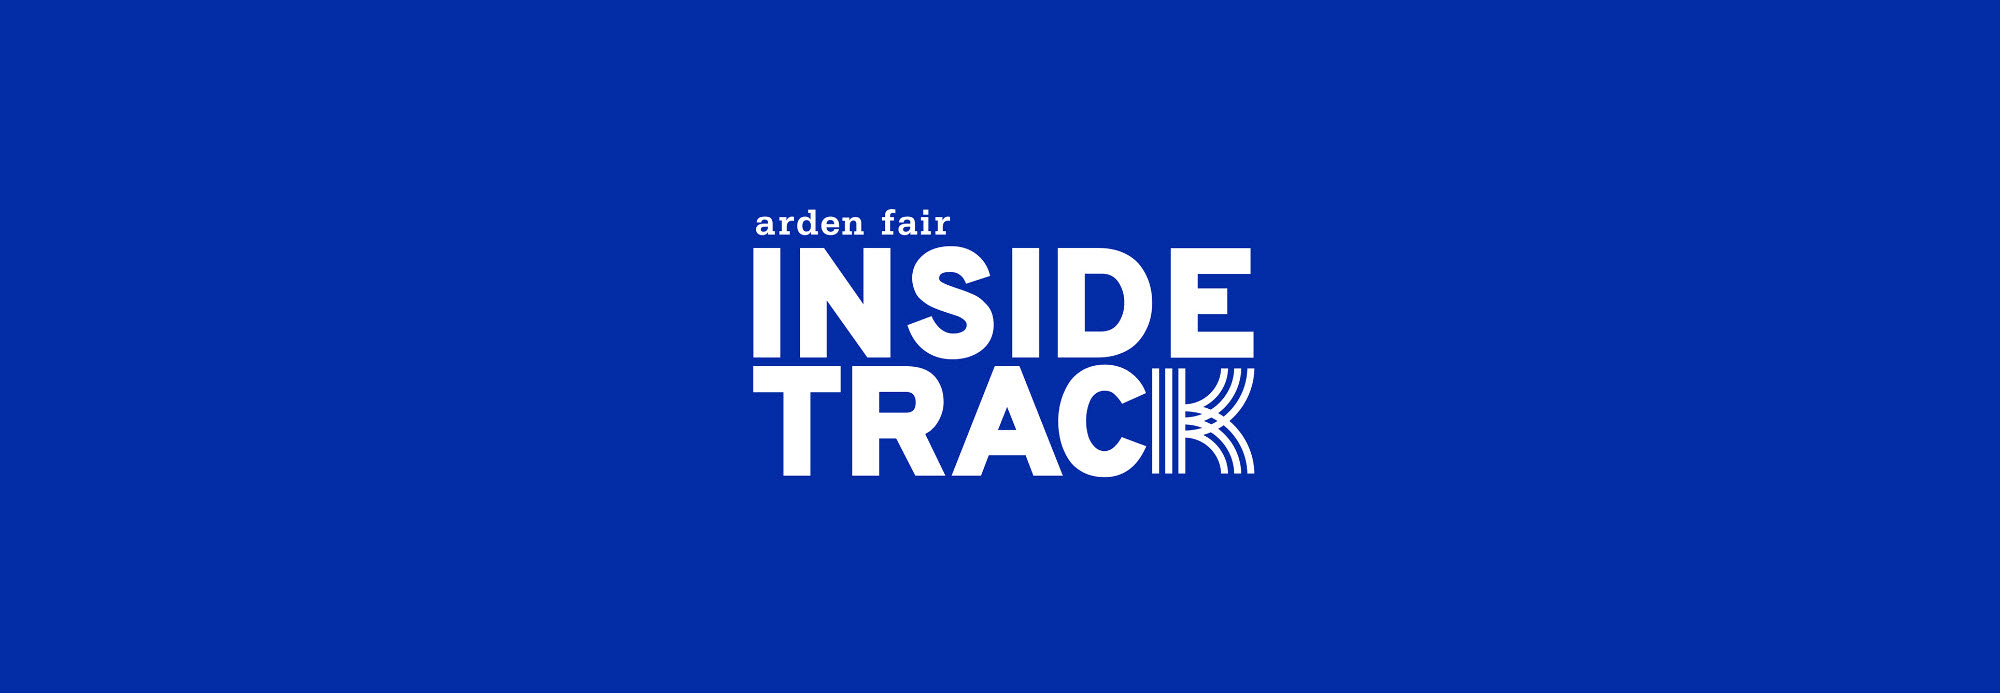 Inside Track logo in white on dark blue background. Copy reads Arden Fair Inside Track.